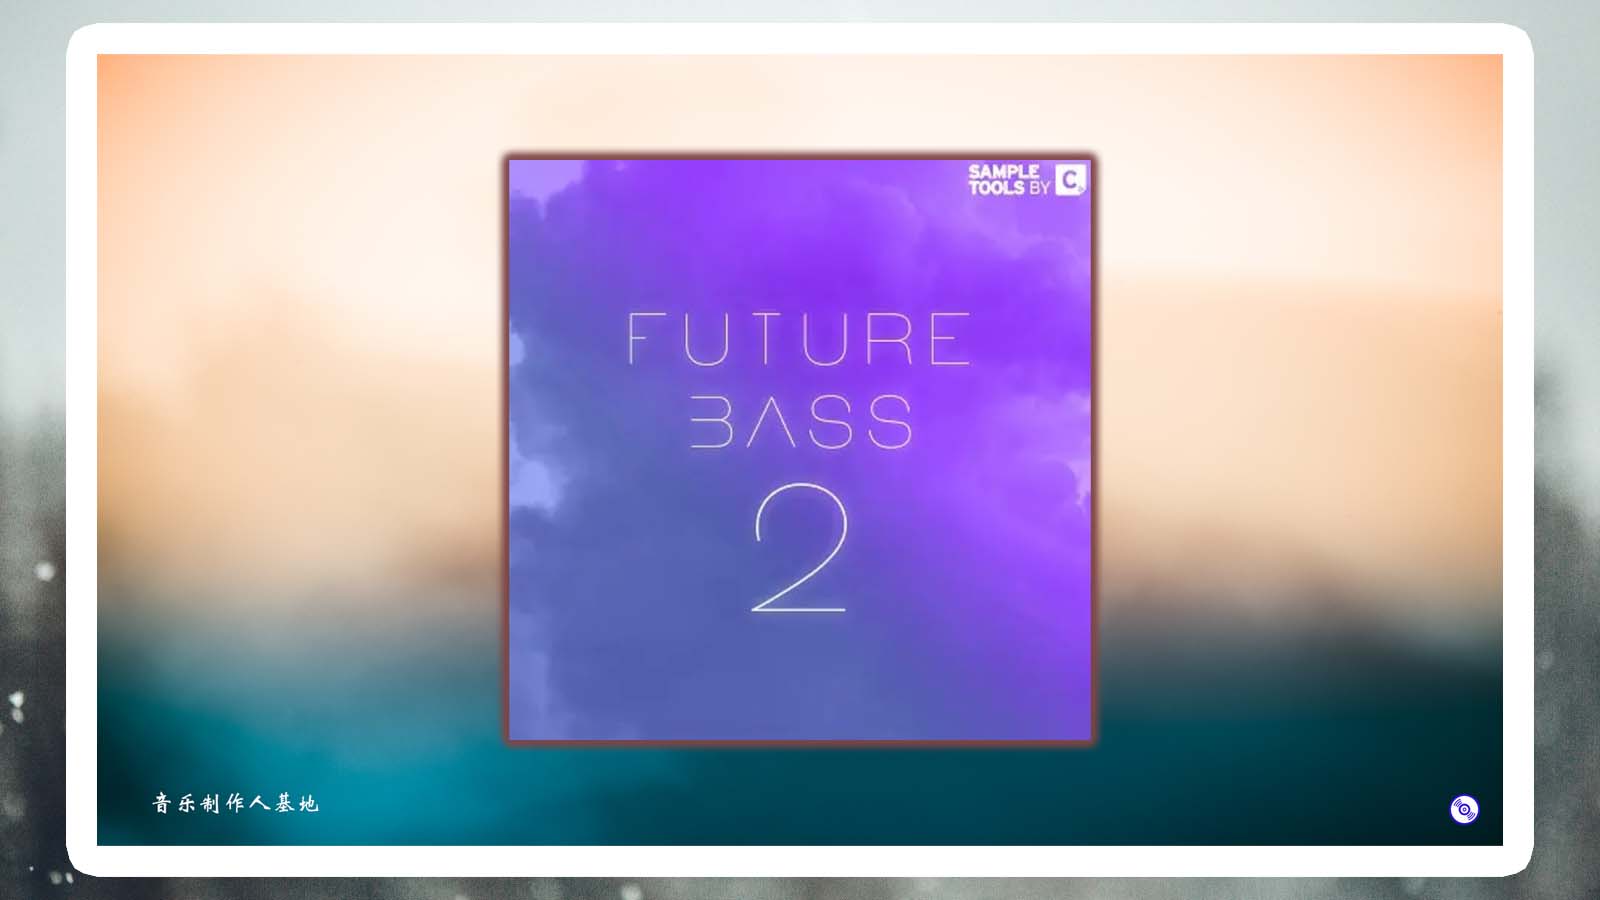 Future Bass风格采样包 Sample Tools by Cr2 Future Bass 2